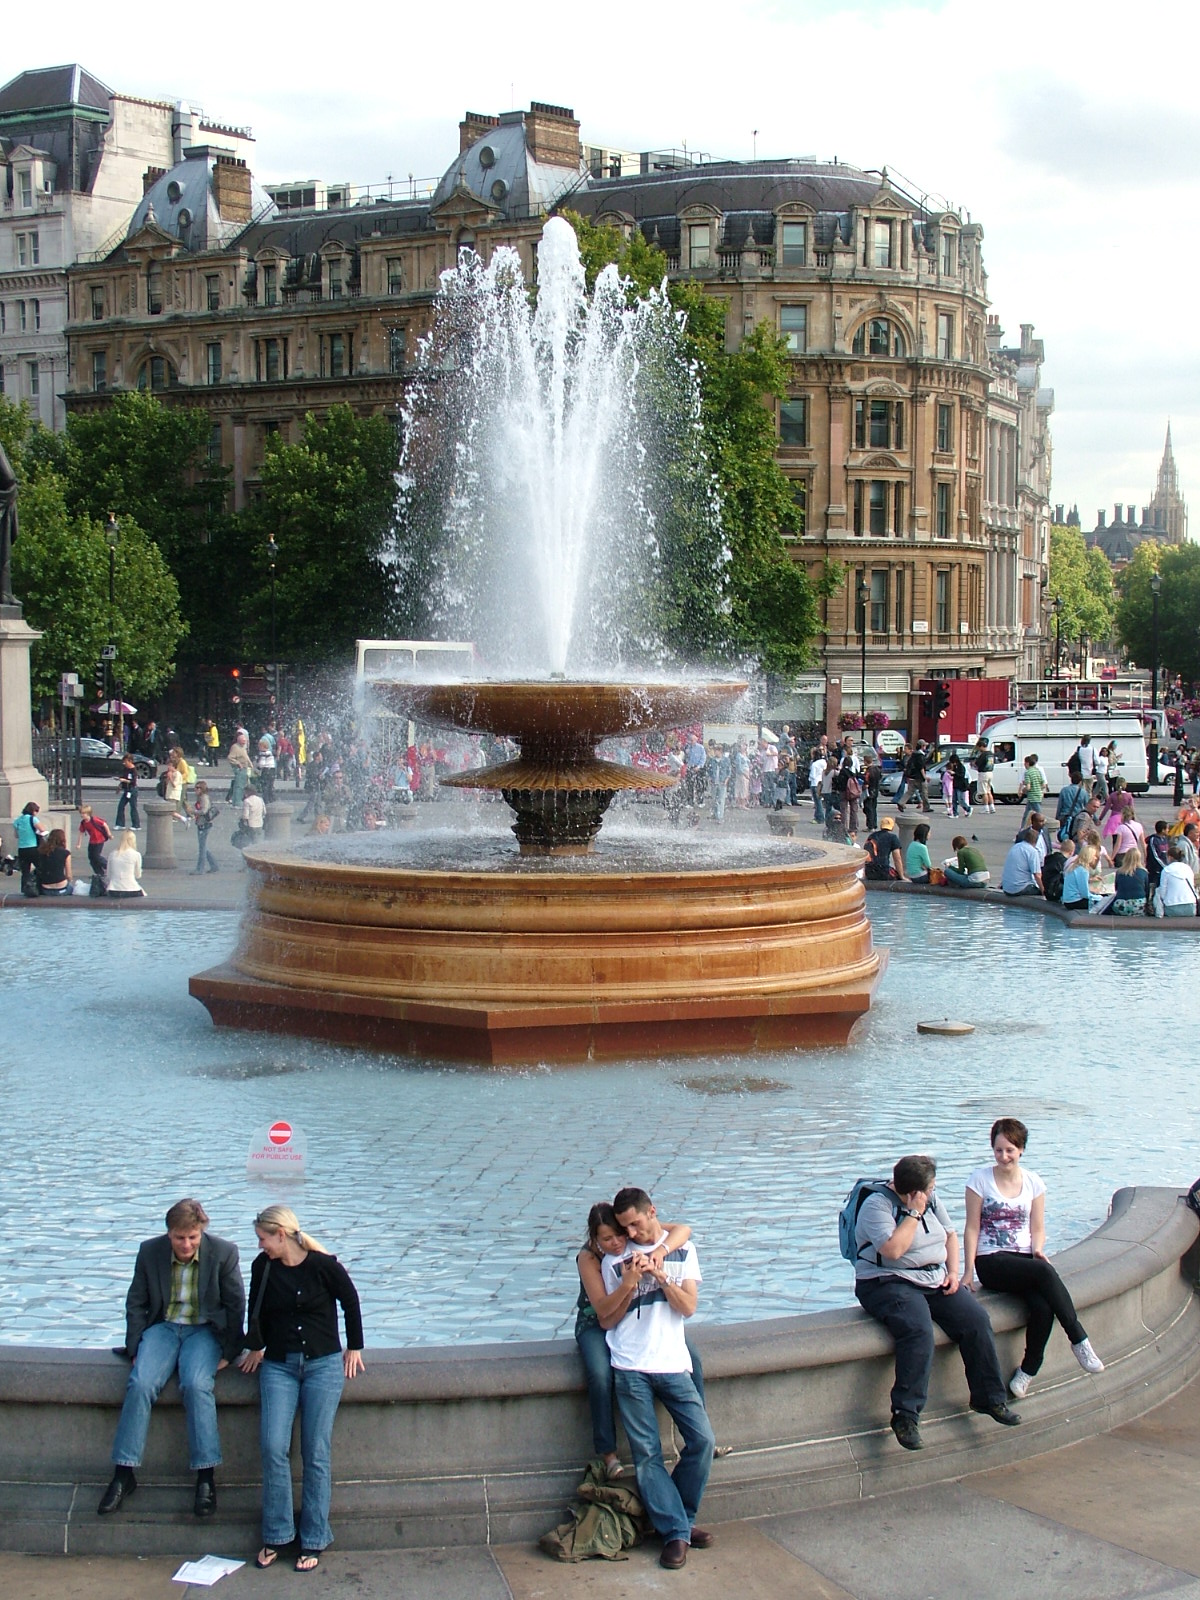 The fountains in Trafalgar Square, London: NEN Gallery